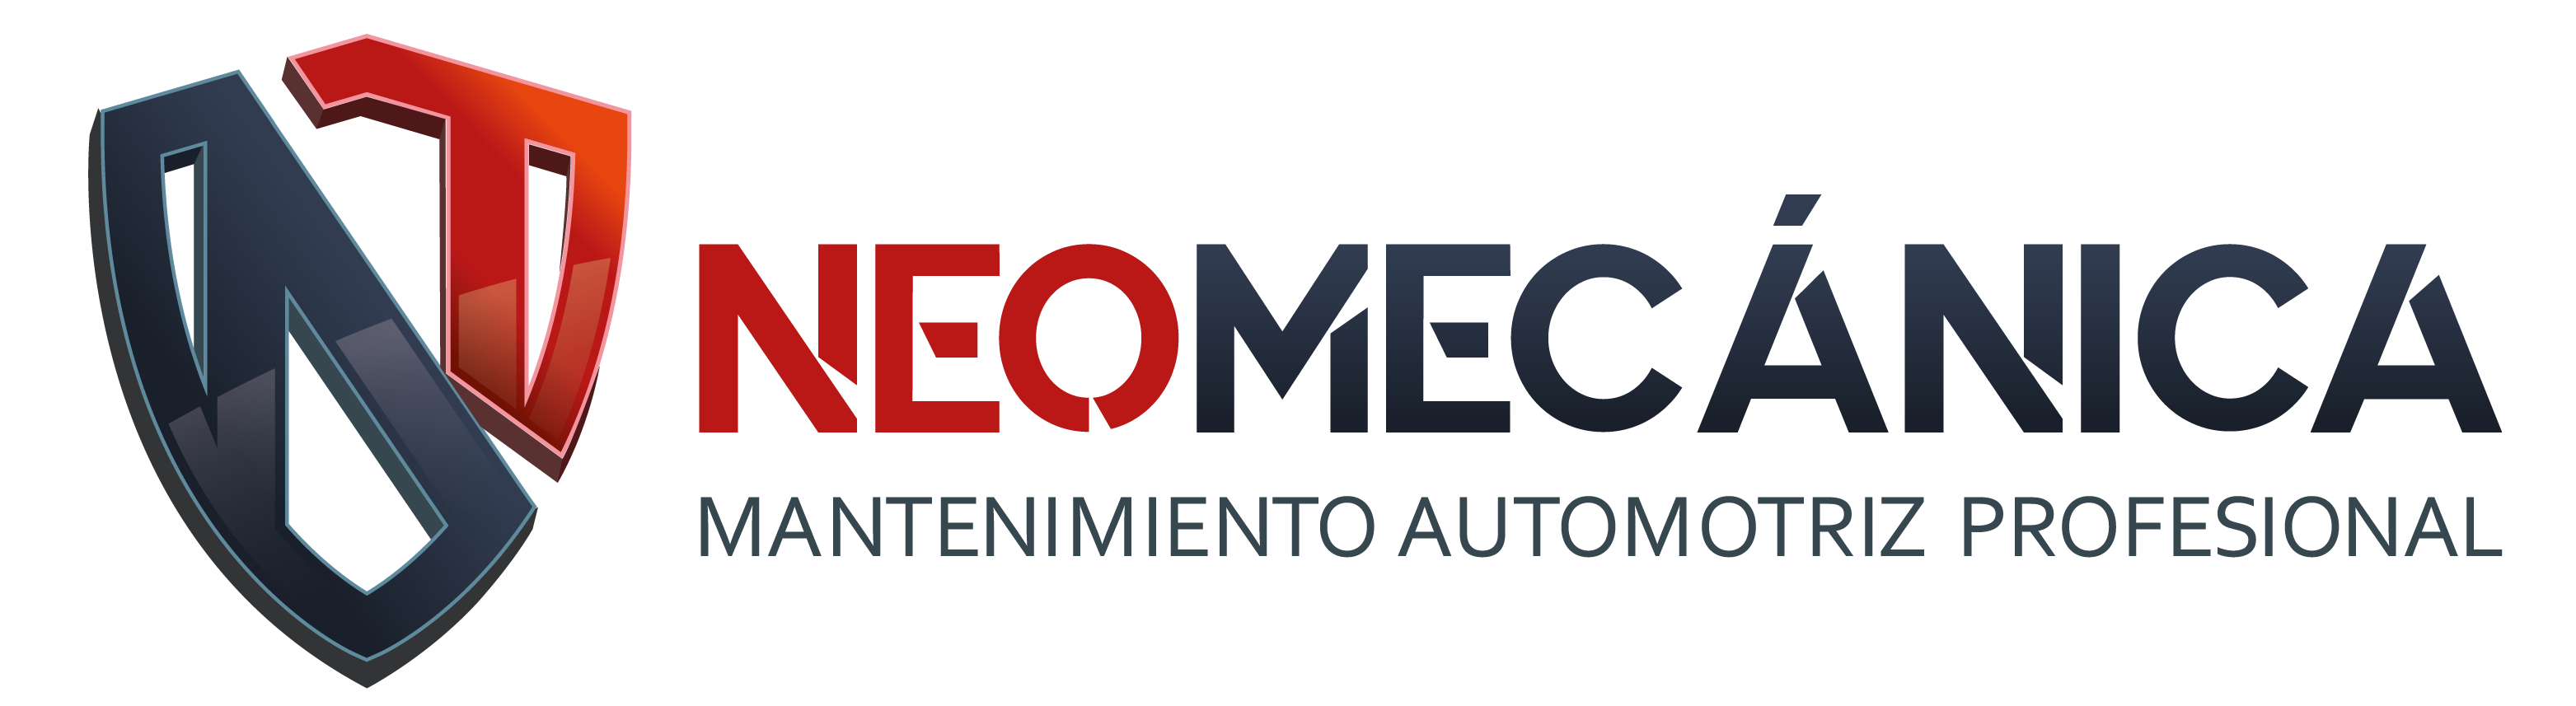 cropped-Logo-neomecanica-02-1.png